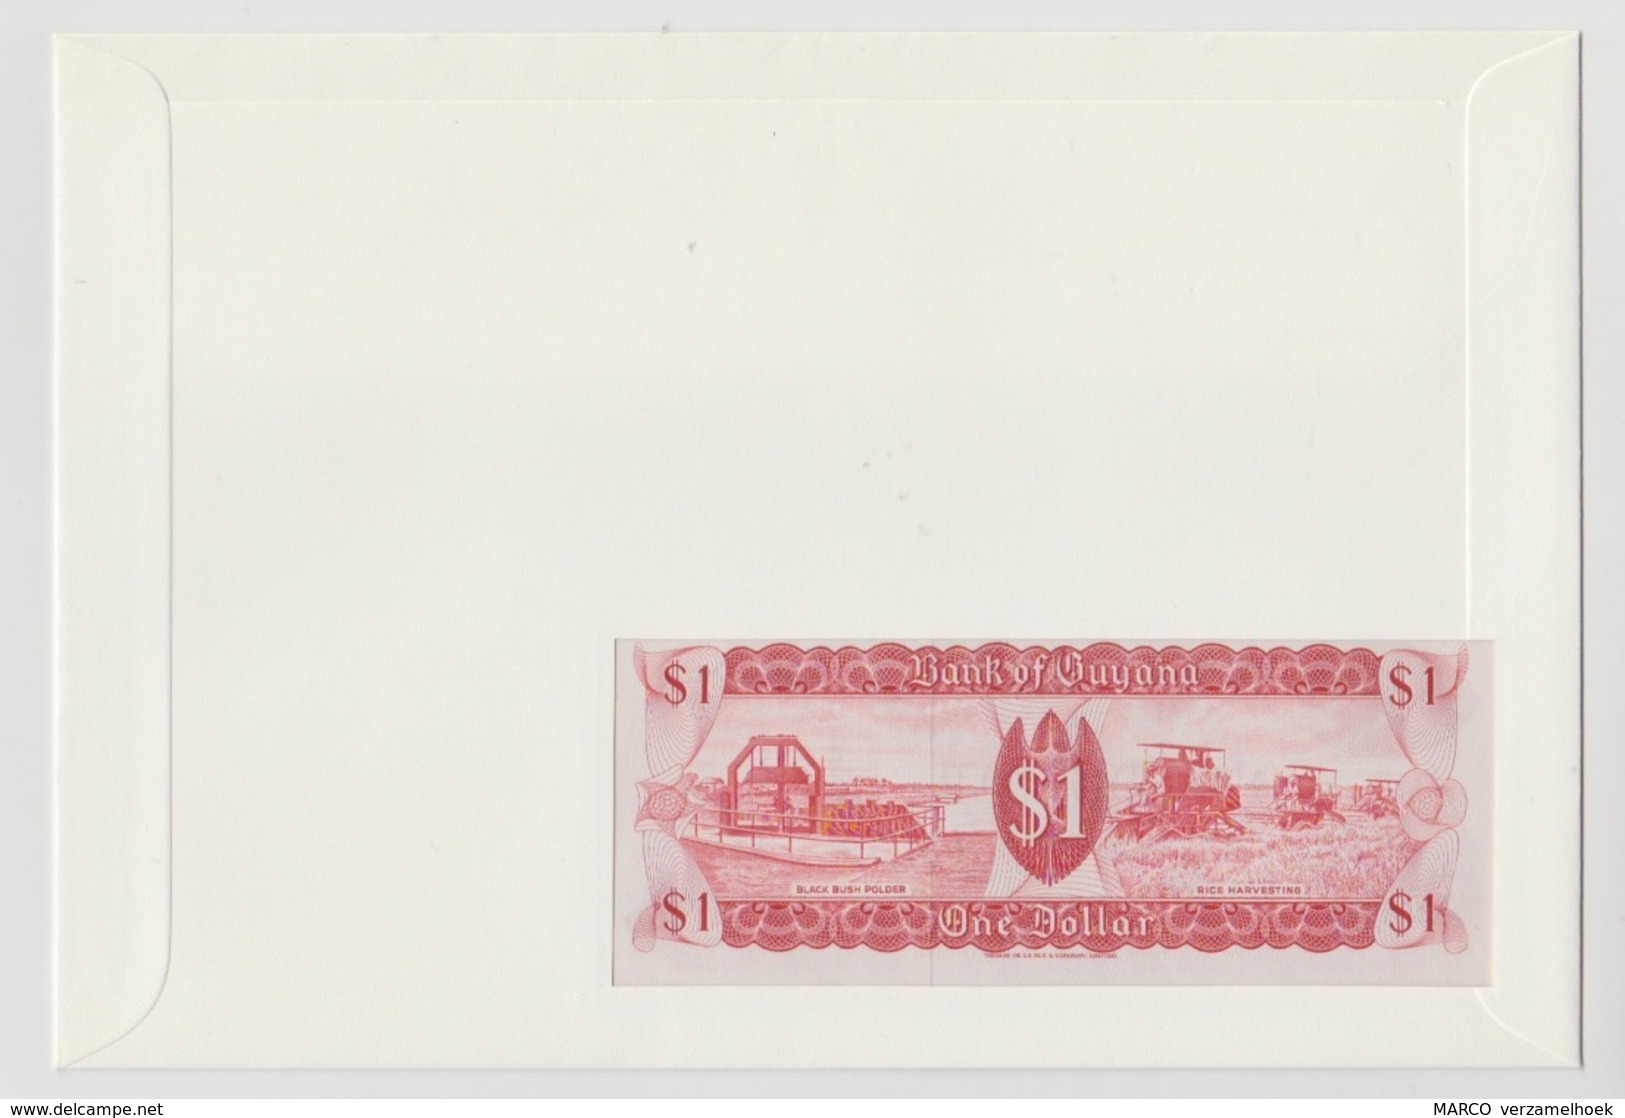 Bank Of Guyana Enveloppe1985 Banknote 1 Dollar UNC - Guyana